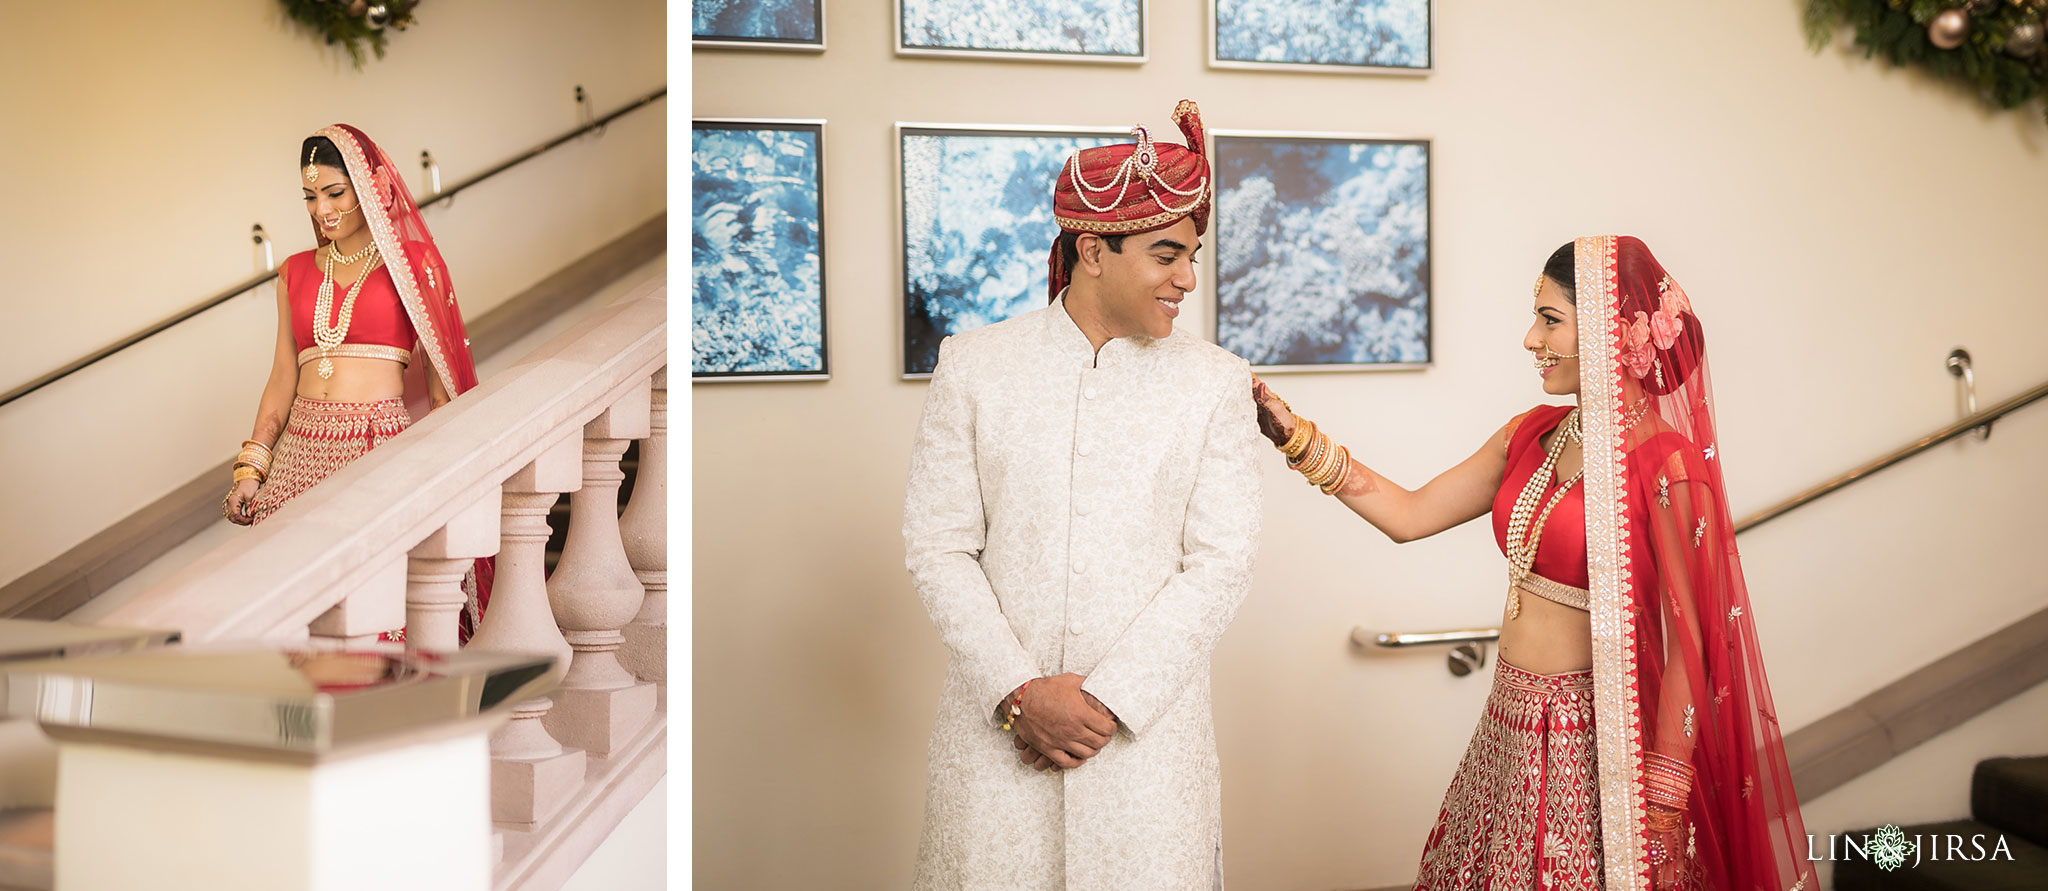 15 ritz carlton laguna niguel first look indian wedding photography